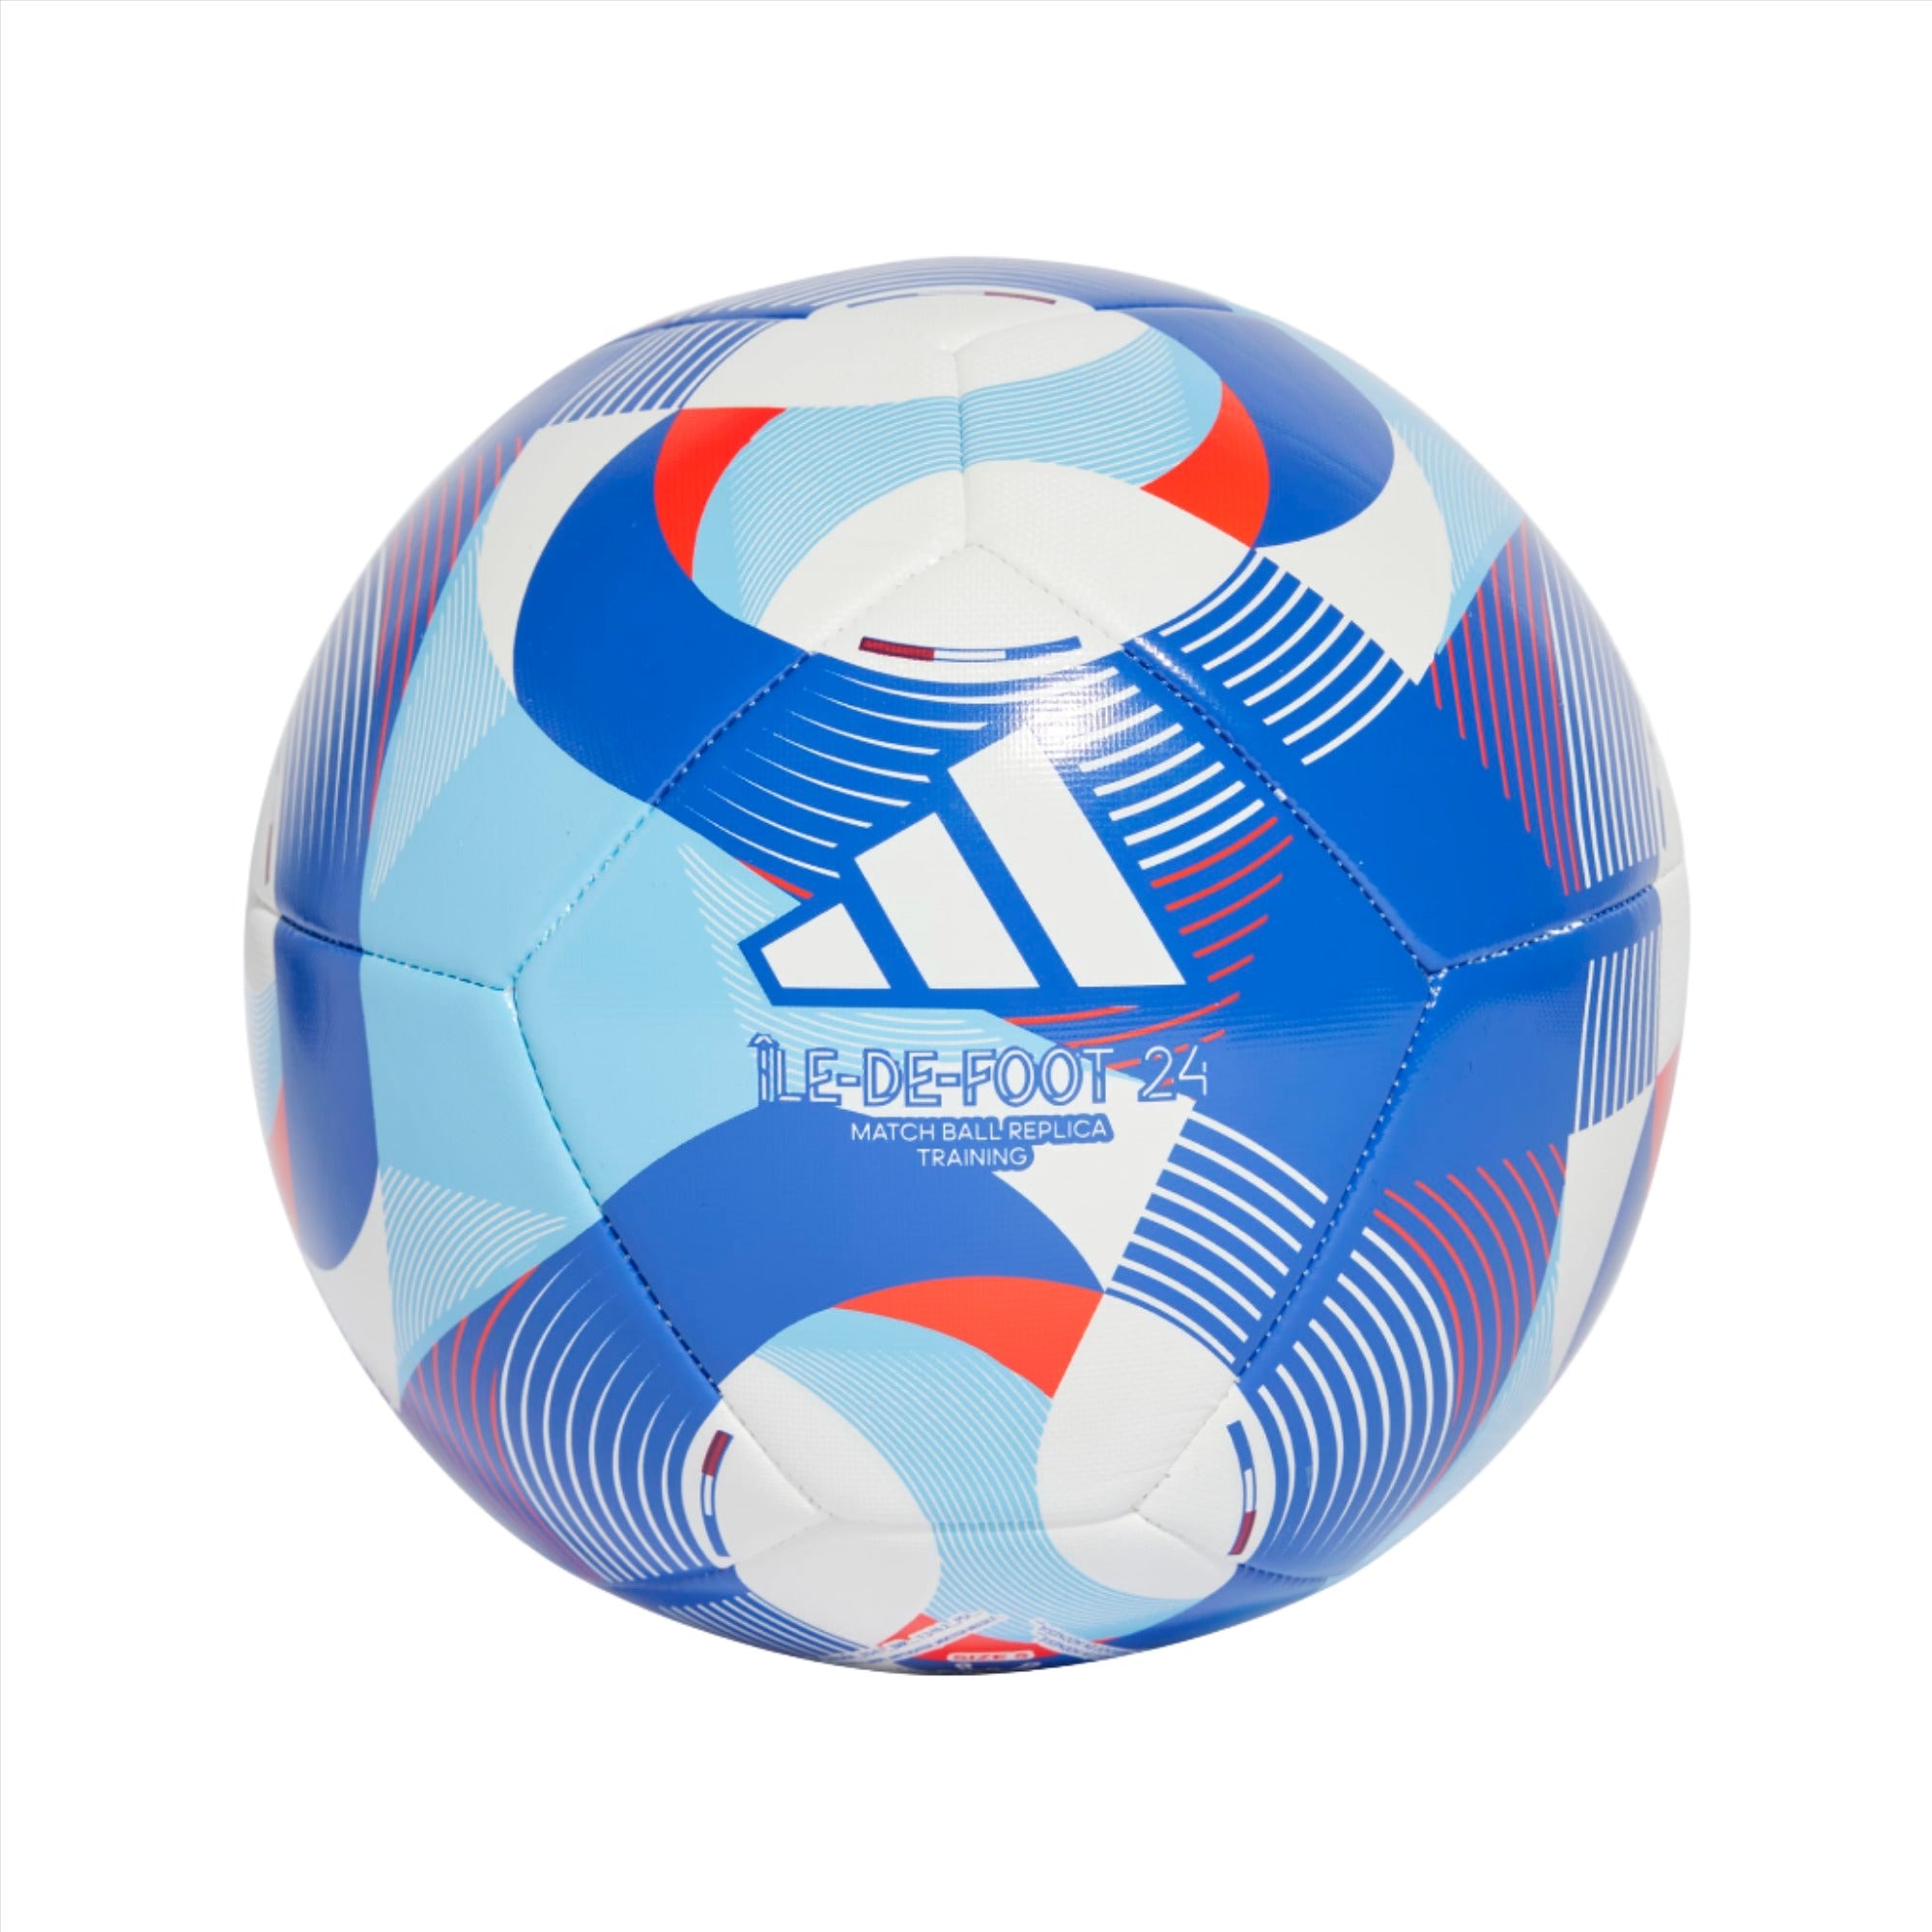 adidas Paris 2024 Summer Olympic Games Training Soccer Ball Equipment Adidas 3  